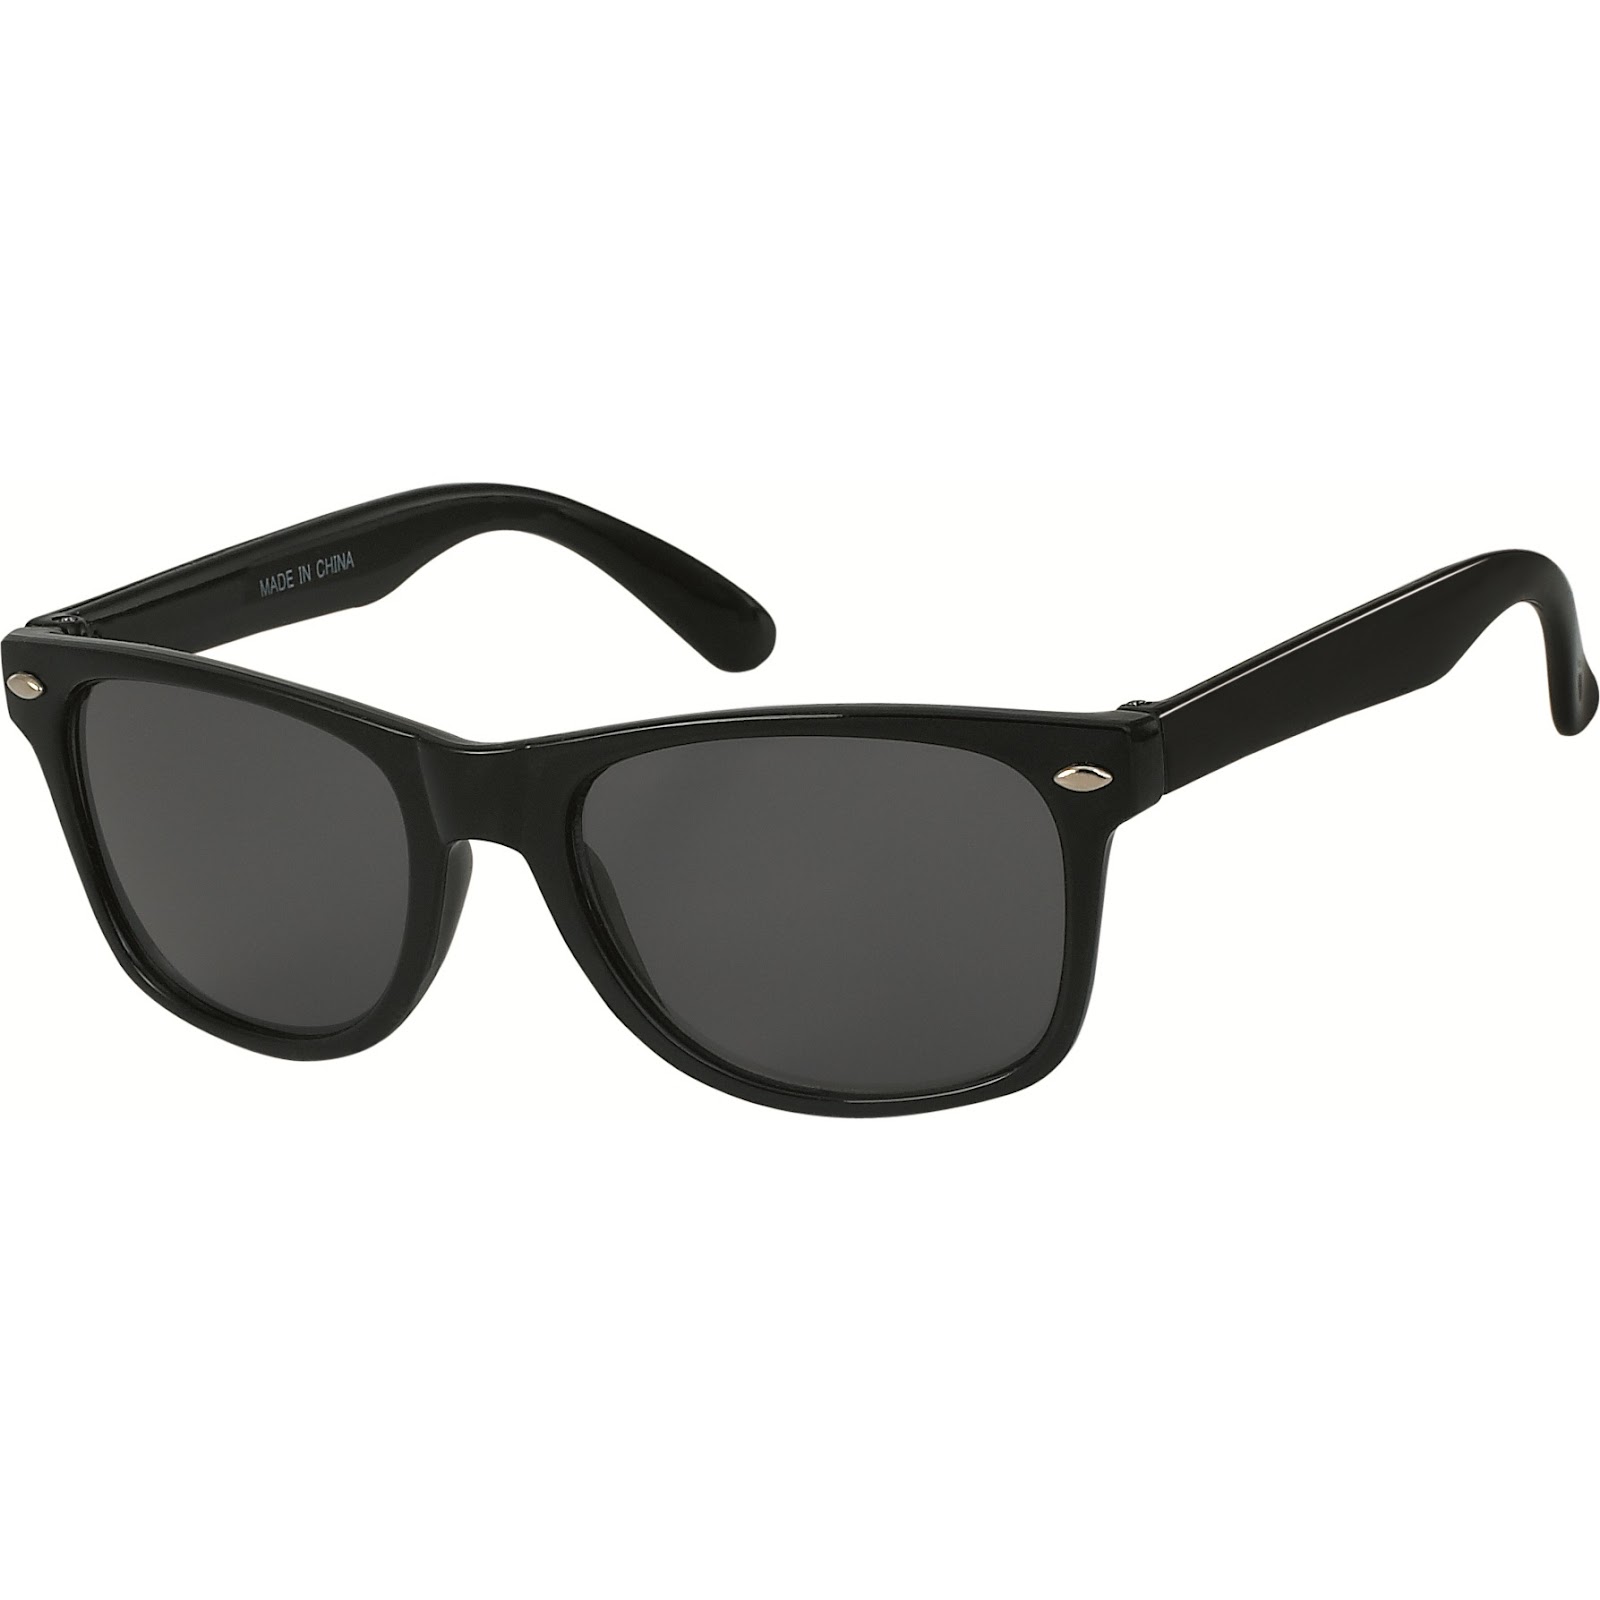 Kachina Wholesale Sunglasses: Keep an Eye on UV Safety for Kids